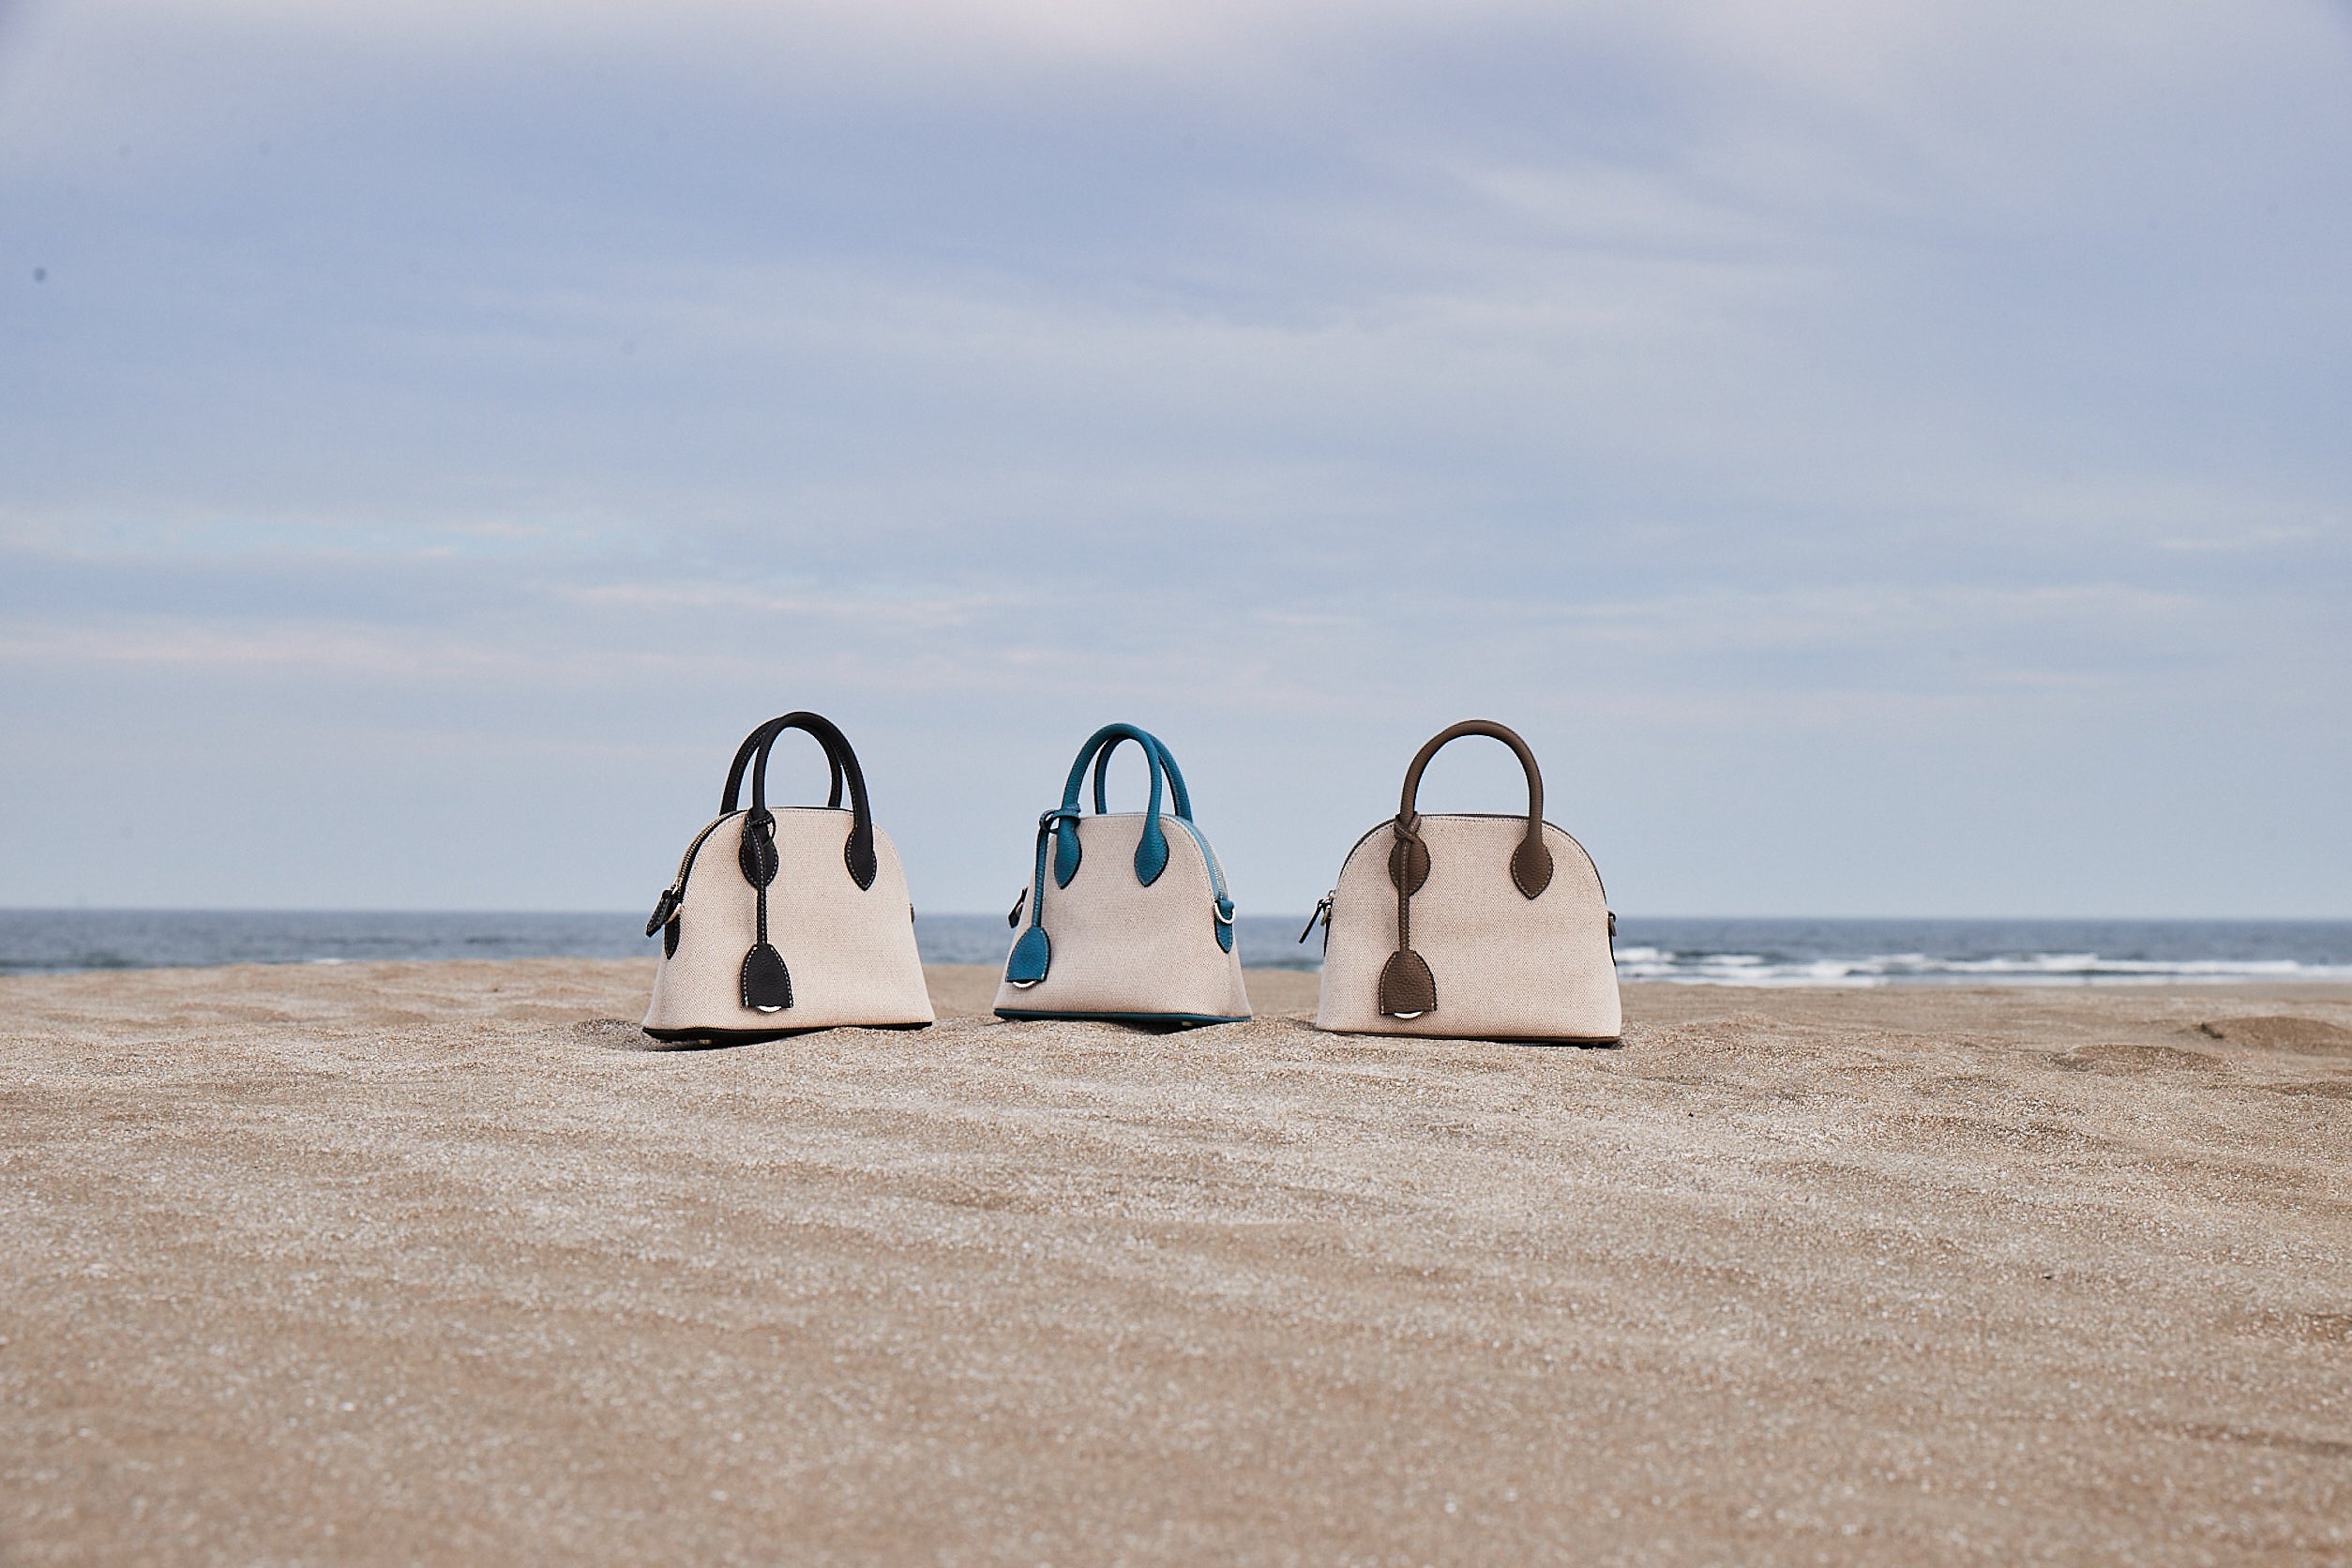 Poletne platnene torbe Mini Emma blagovne znamke BONAVENTURA, predstavljene na plaži.